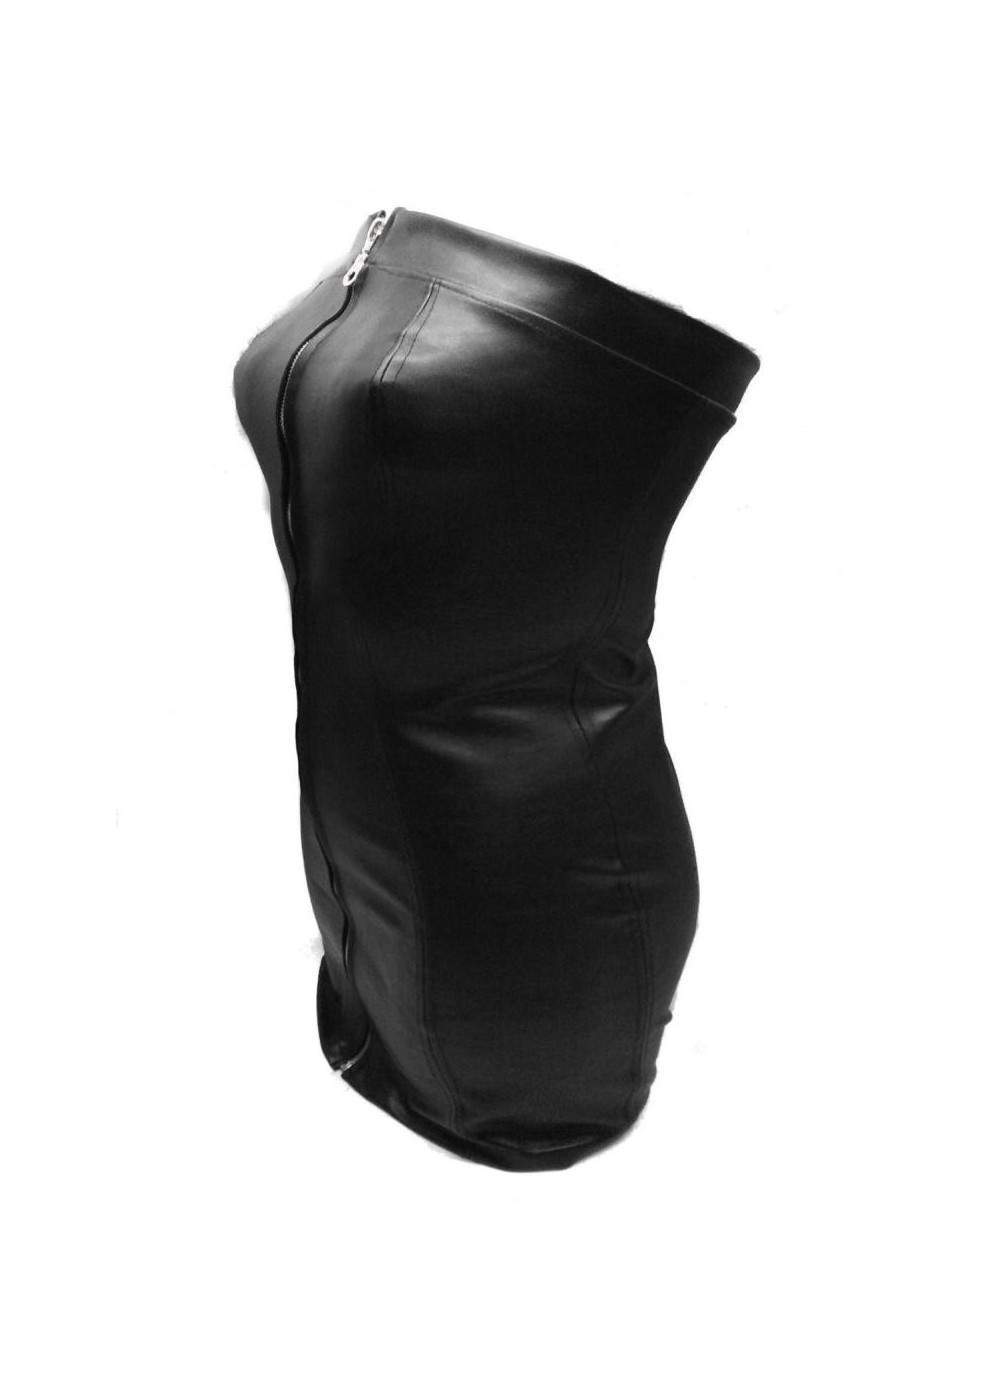 Designer Leder Kleid schwarz Größe L - XXL (44 - 52) ab 35,00 € - 